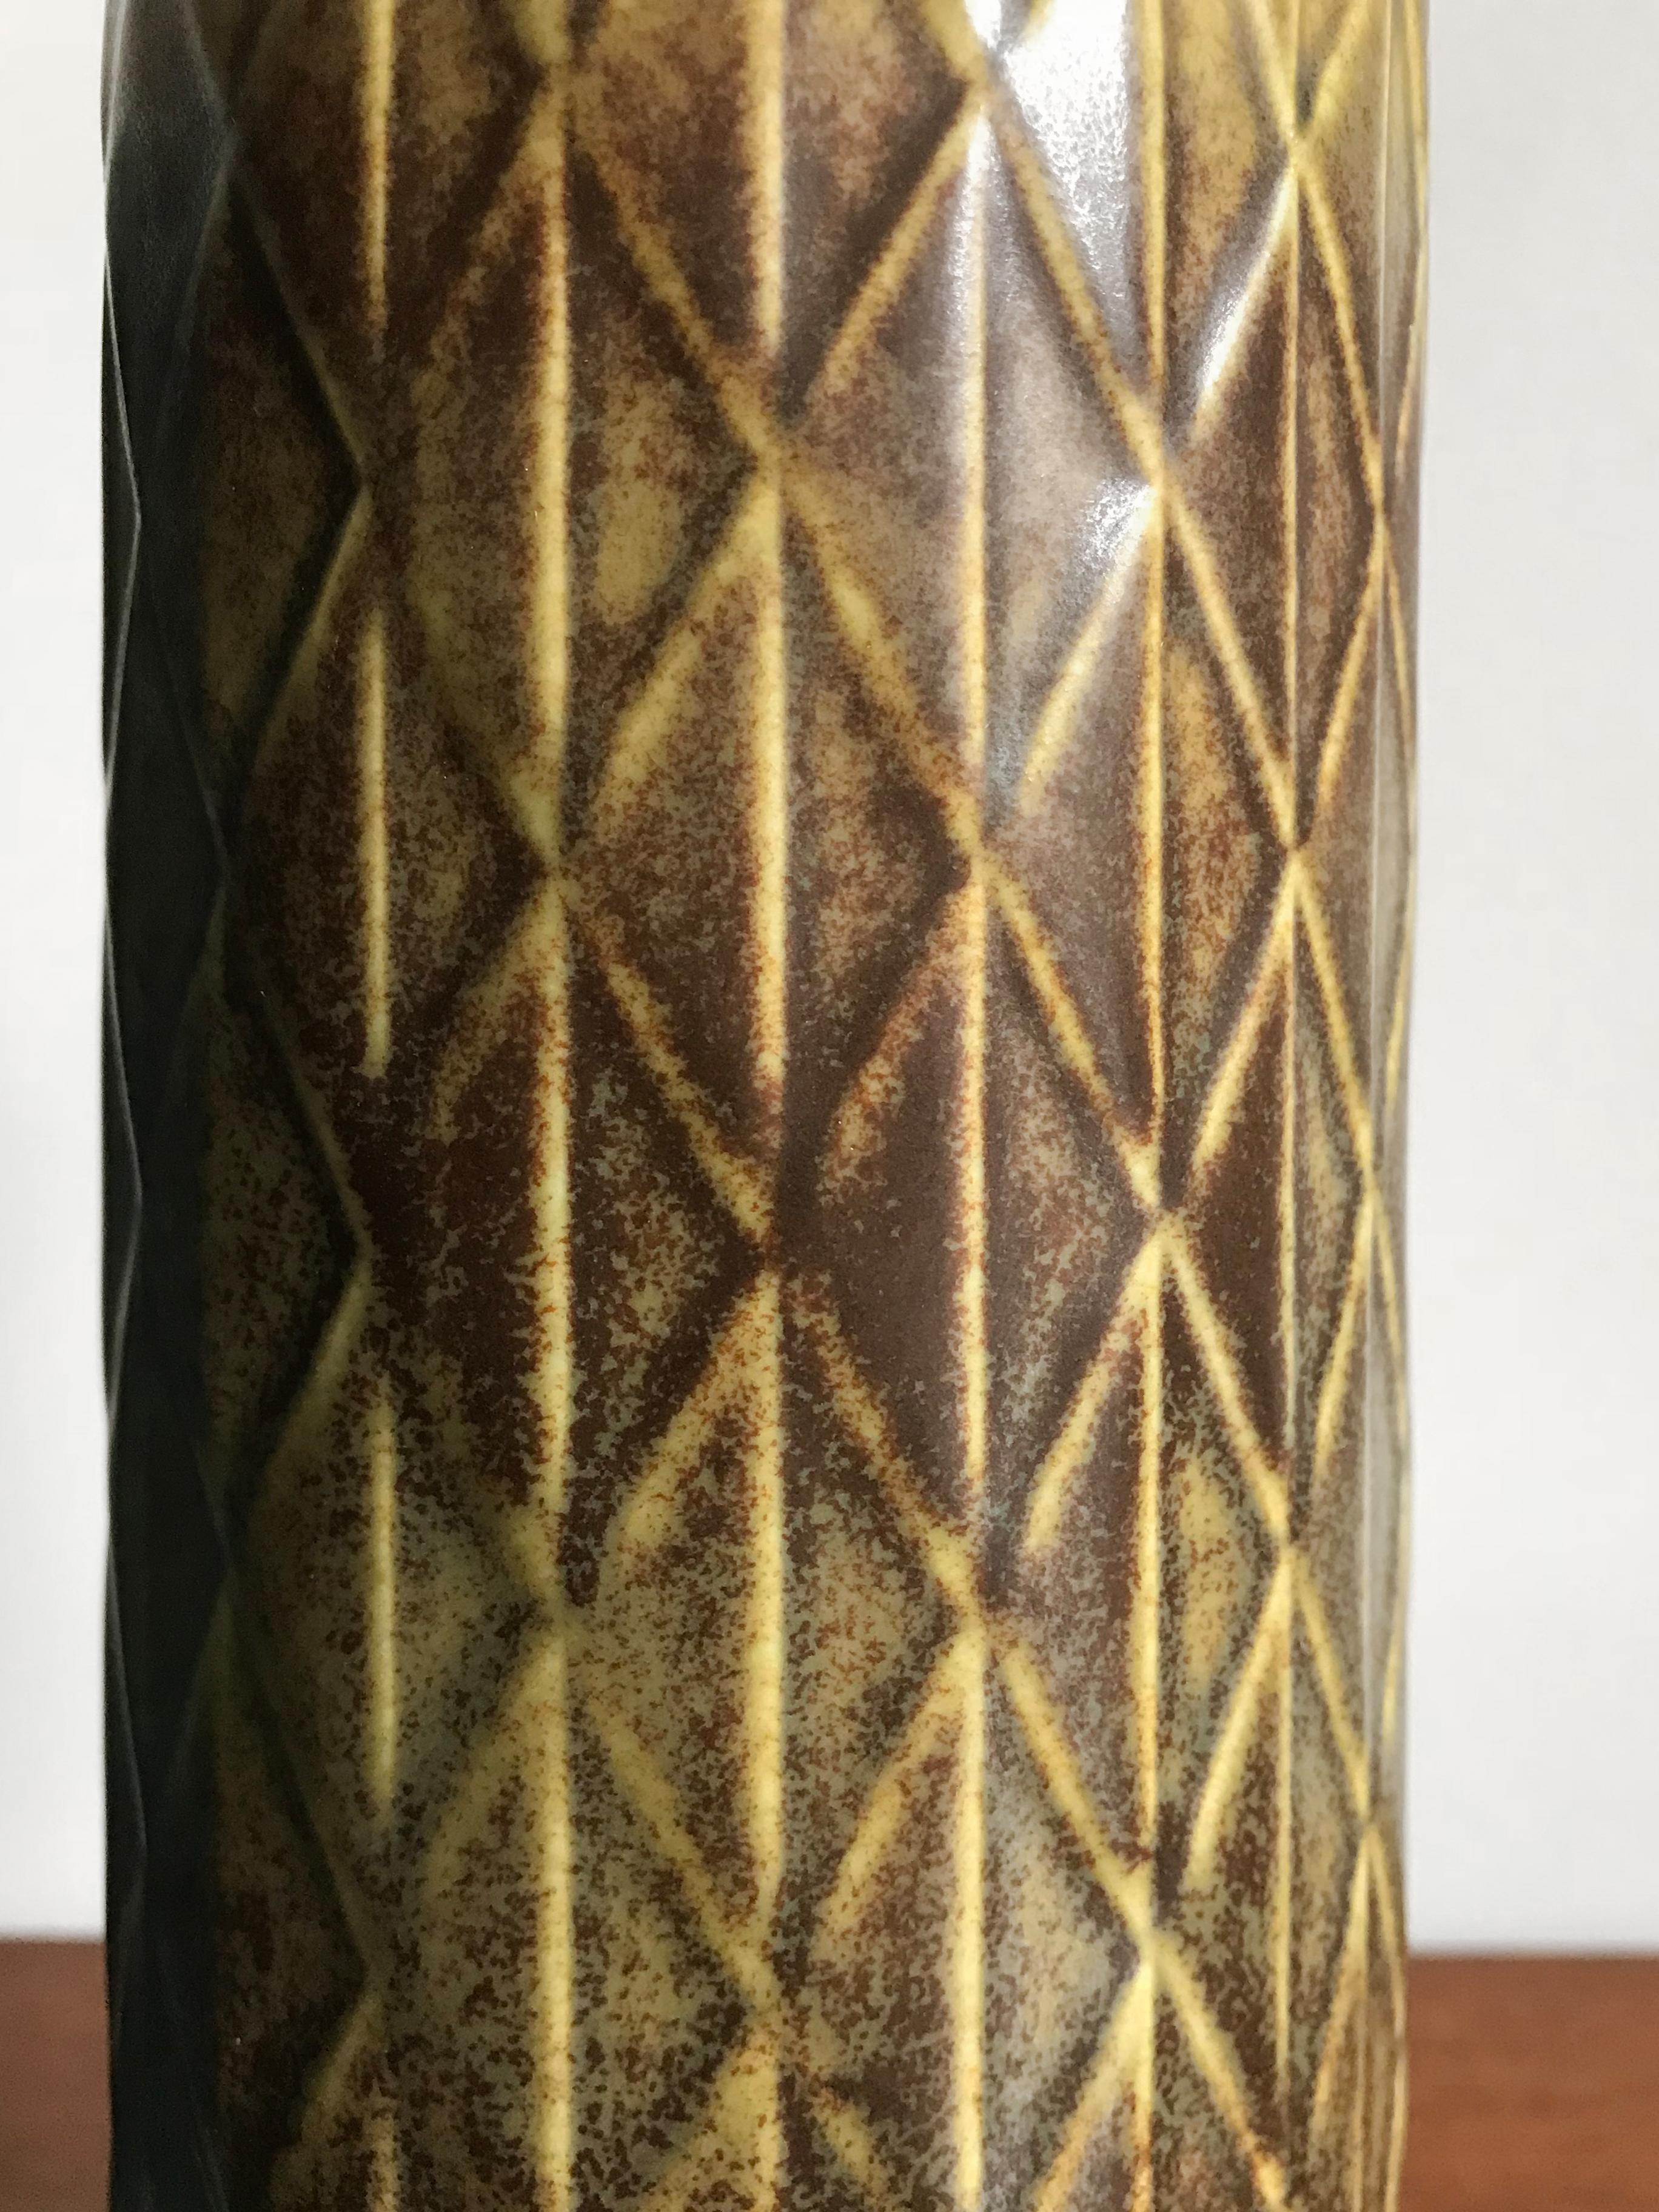 Scandinavian stoneware vase designed by Gunnar Nylund for Rörstrand, made in Sweden, marked on the bottom, in matte enamel, 1960s.
Dimensions: Height 22 cm, diameter 8 cm.